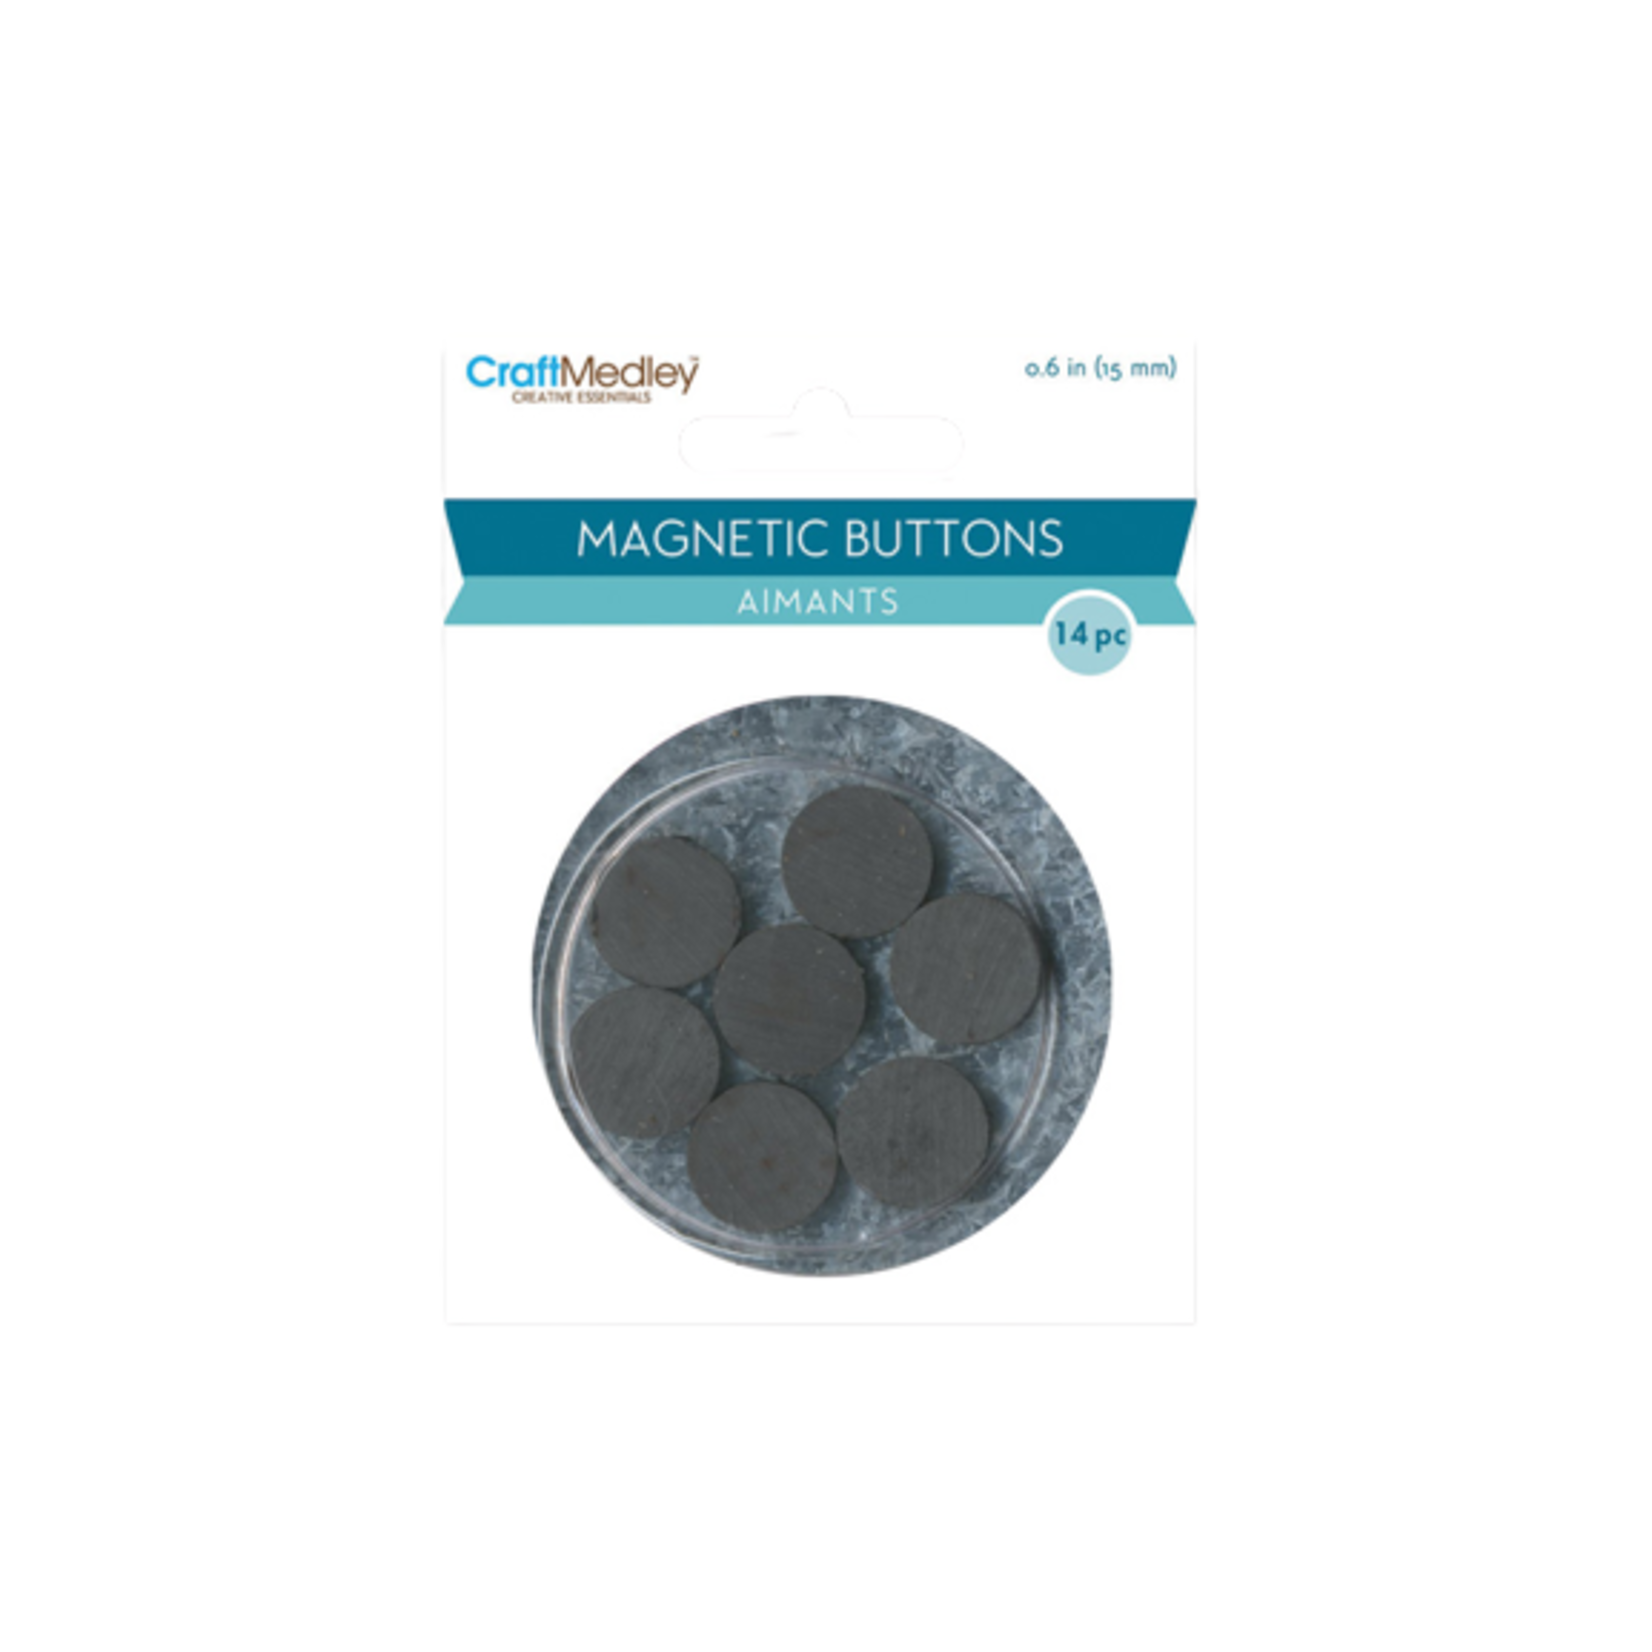 MAGNETIC BUTTONS (15 MM) 14 PCS